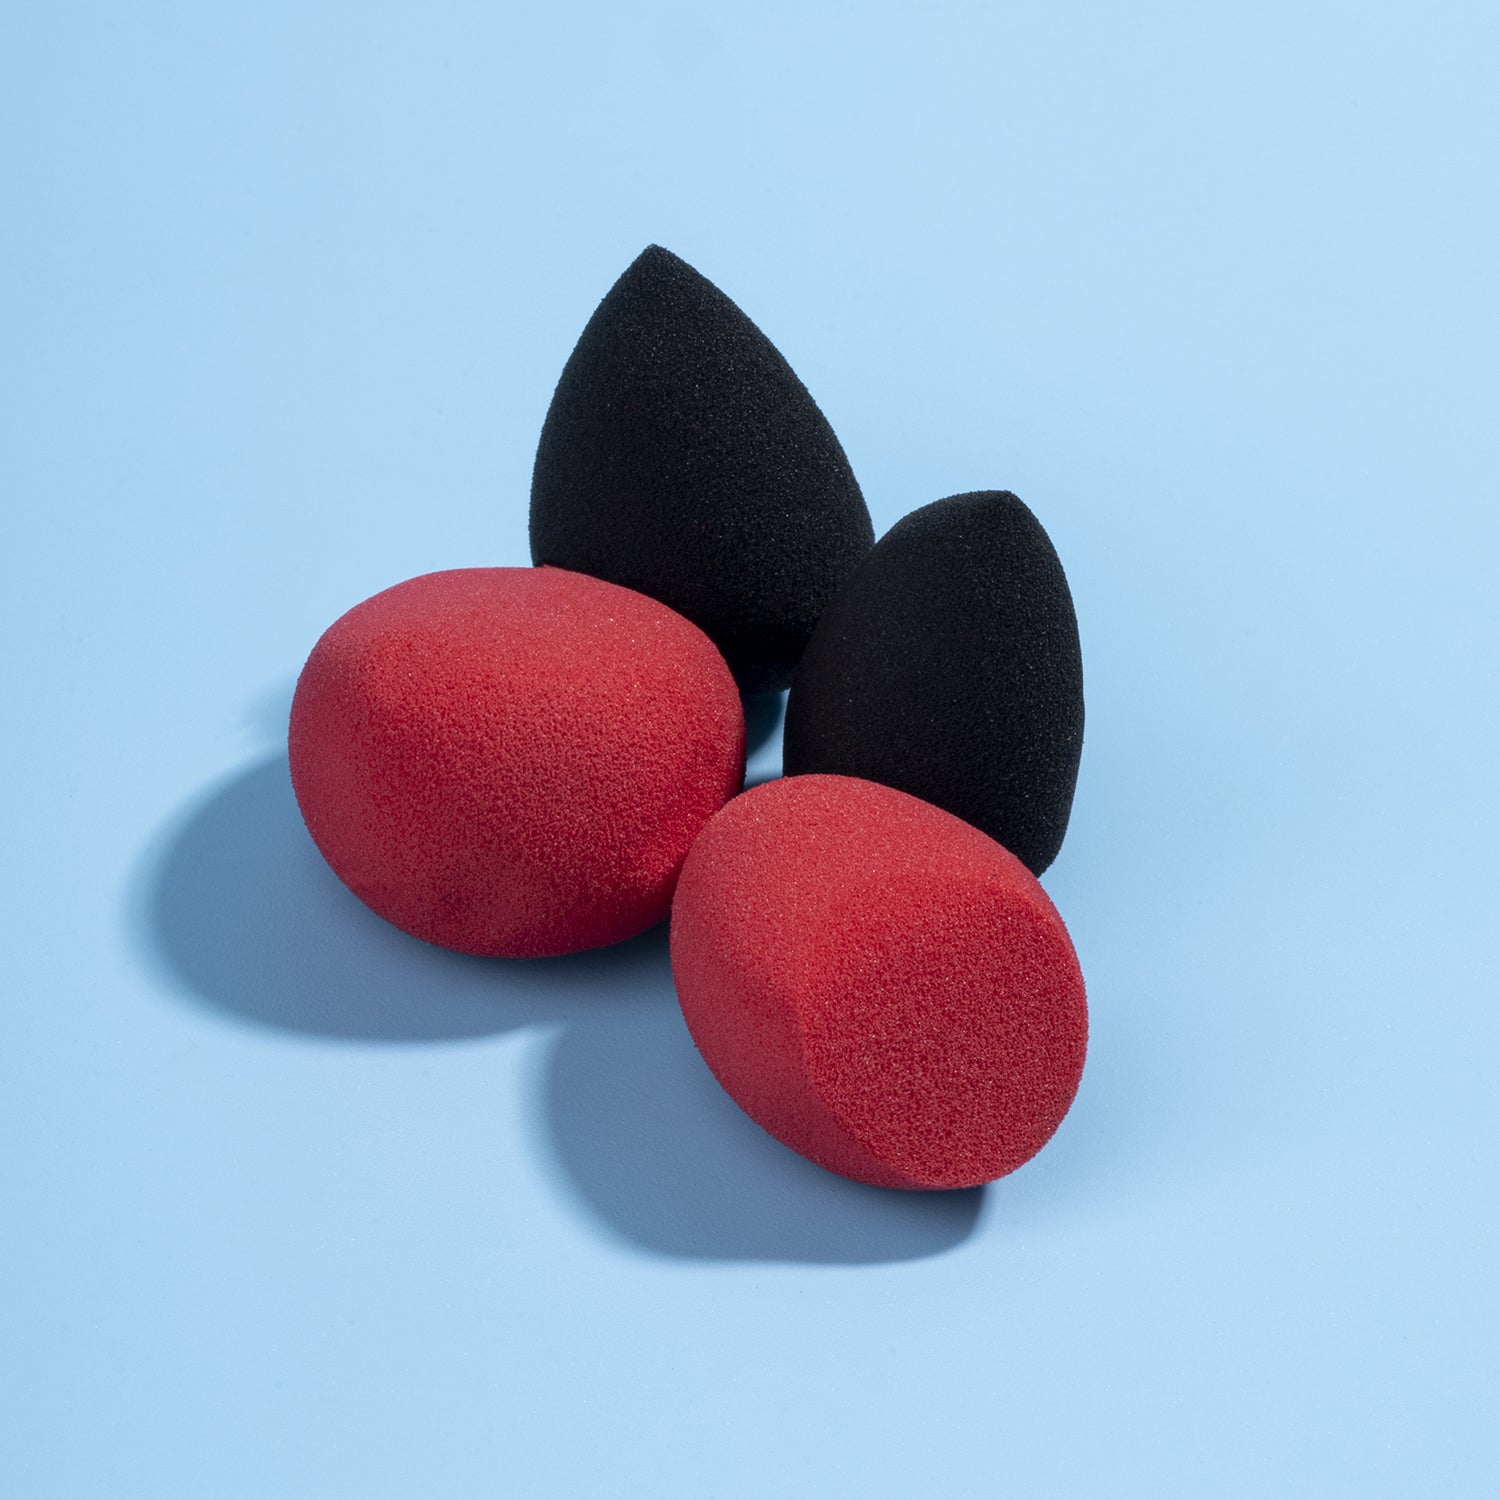 PAC Cosmetics Mini Sponge Set (Water Drop, Egg, Olive Cut) (Red, Black) (4 Pc)